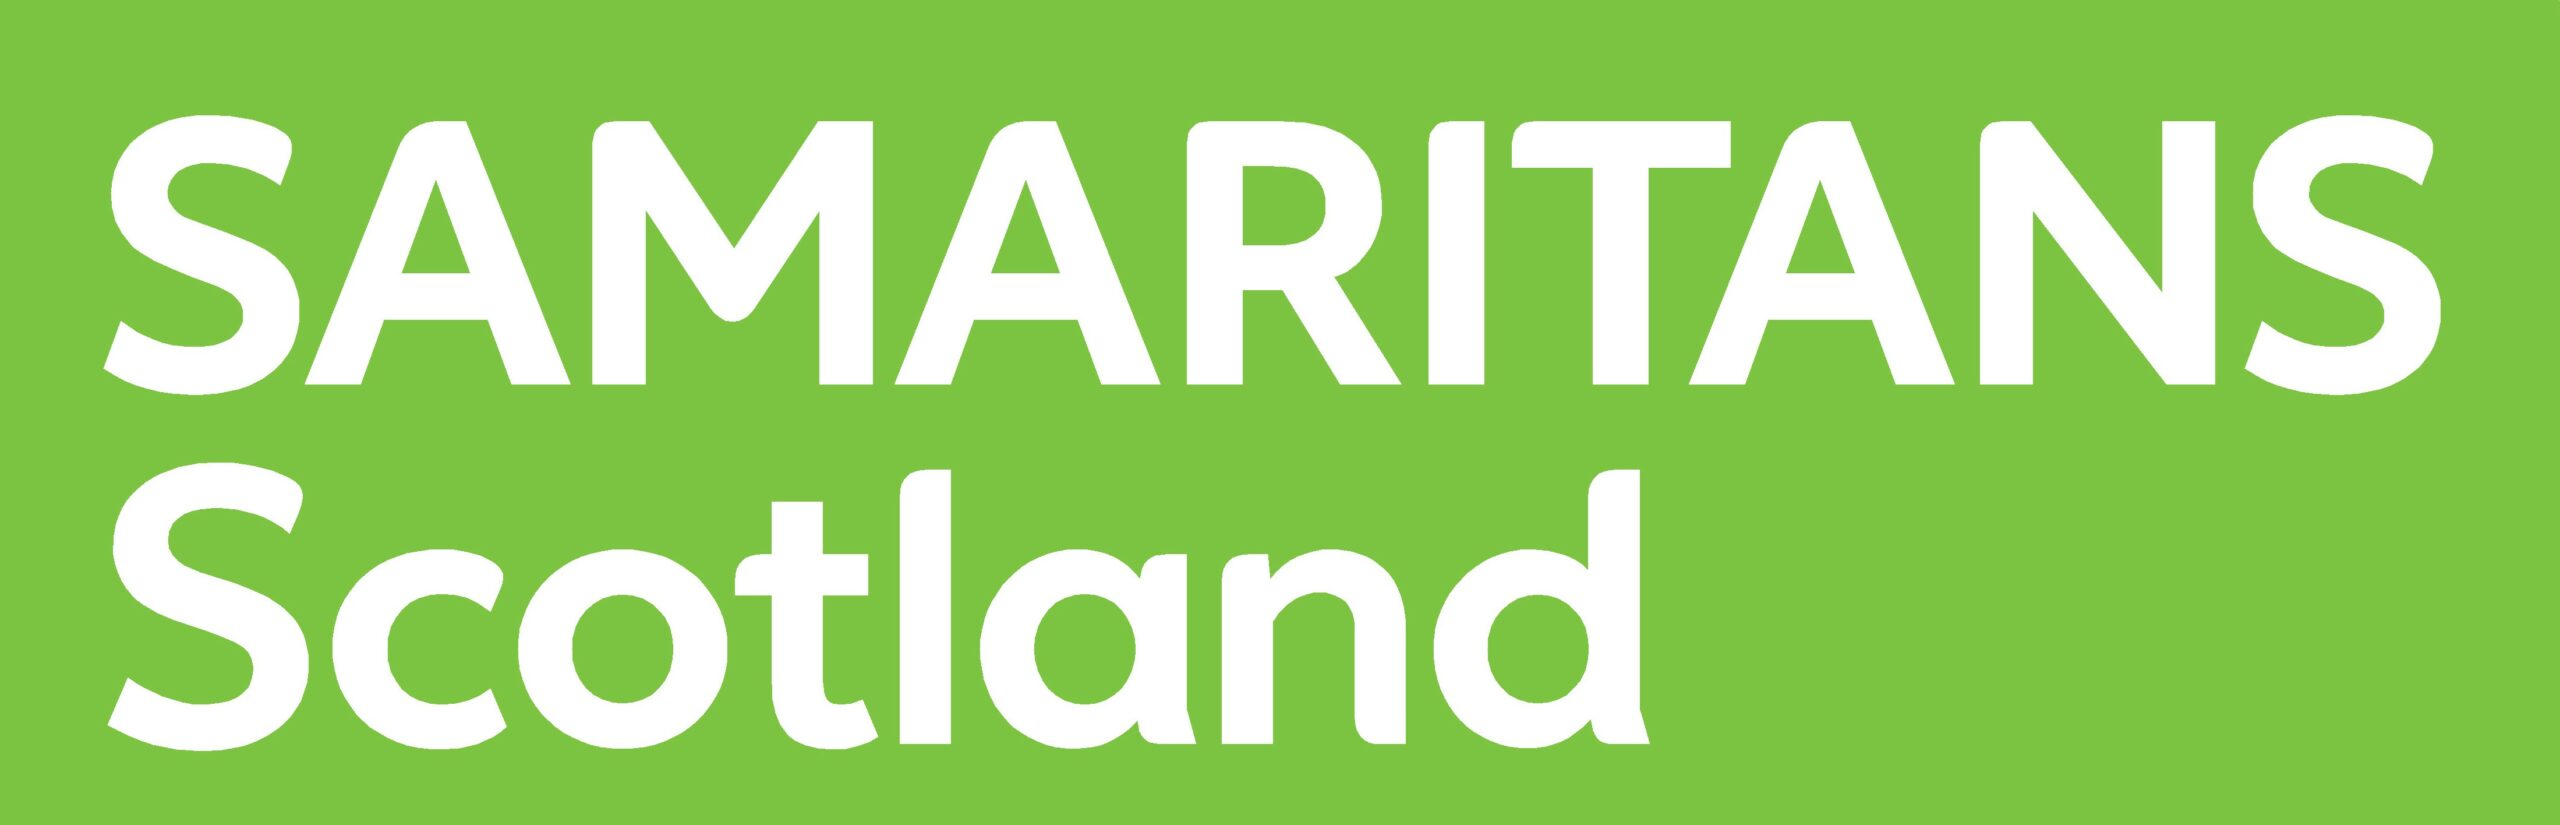 Samartians Scotland Logo (1)